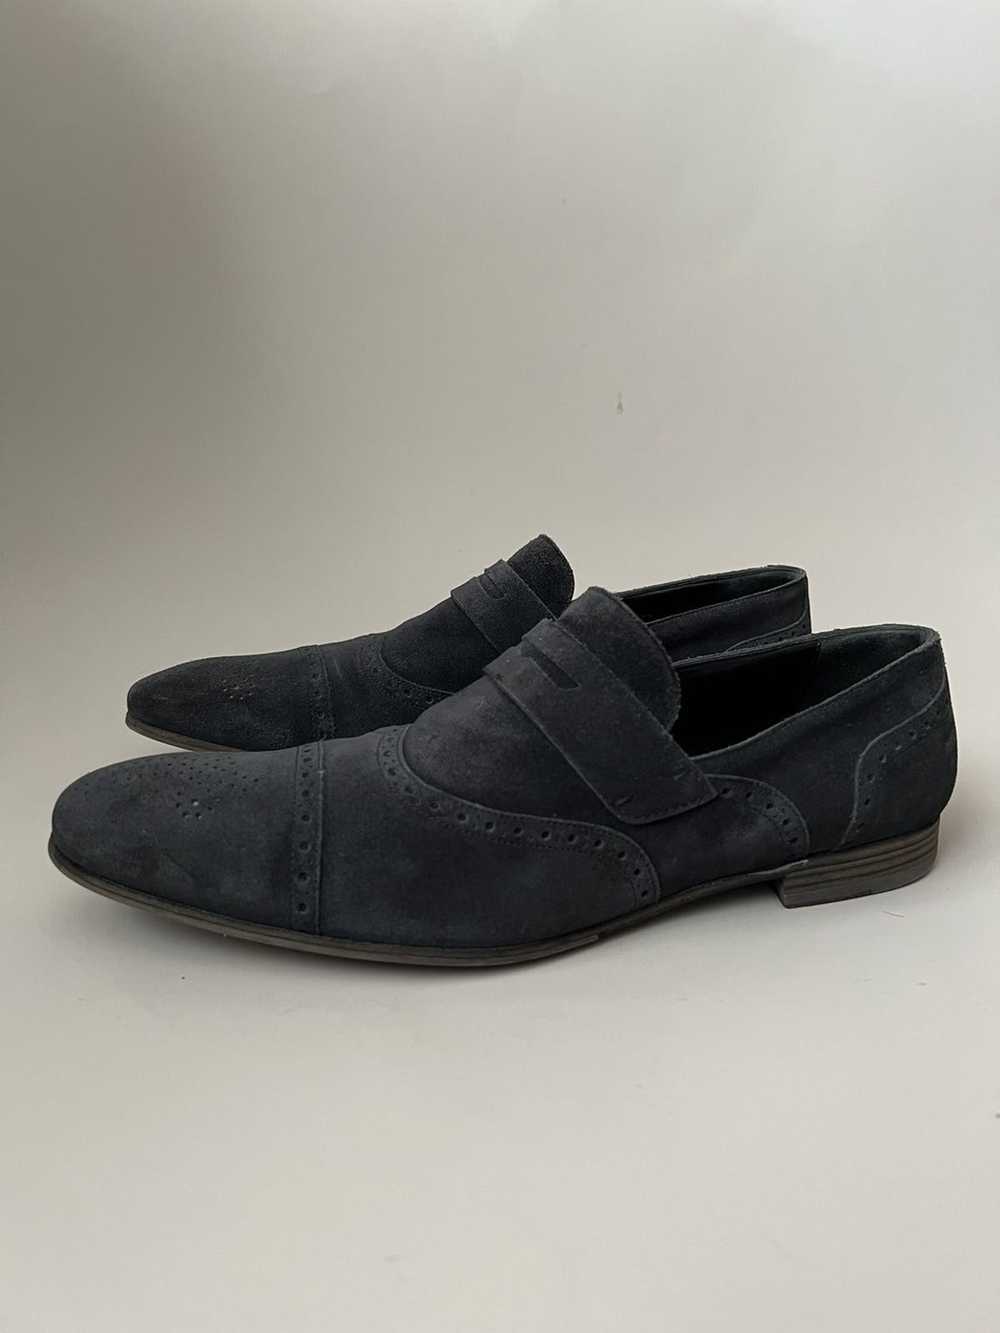 Yves Saint Laurent YSL suede shoes - image 6